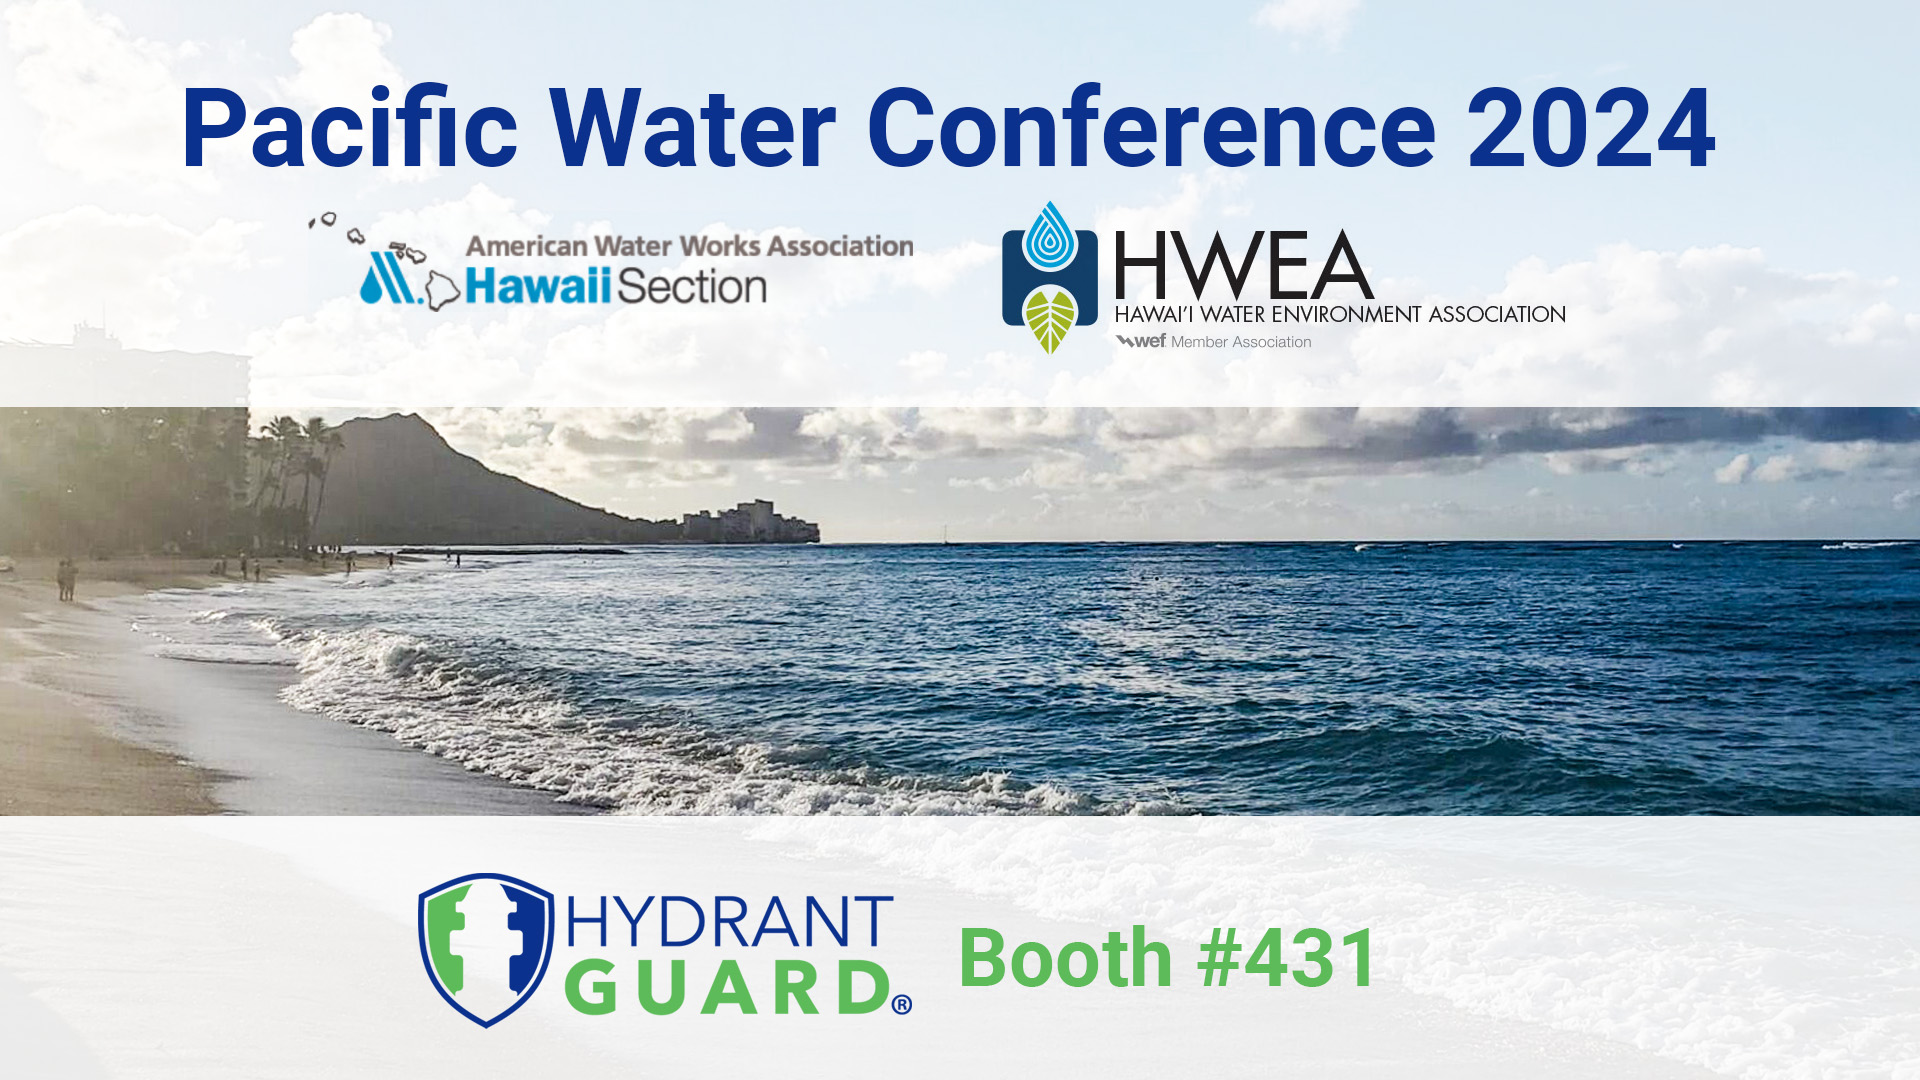 AWWA/HWEA Pacific Water Conference 2024 Hydrant Guard